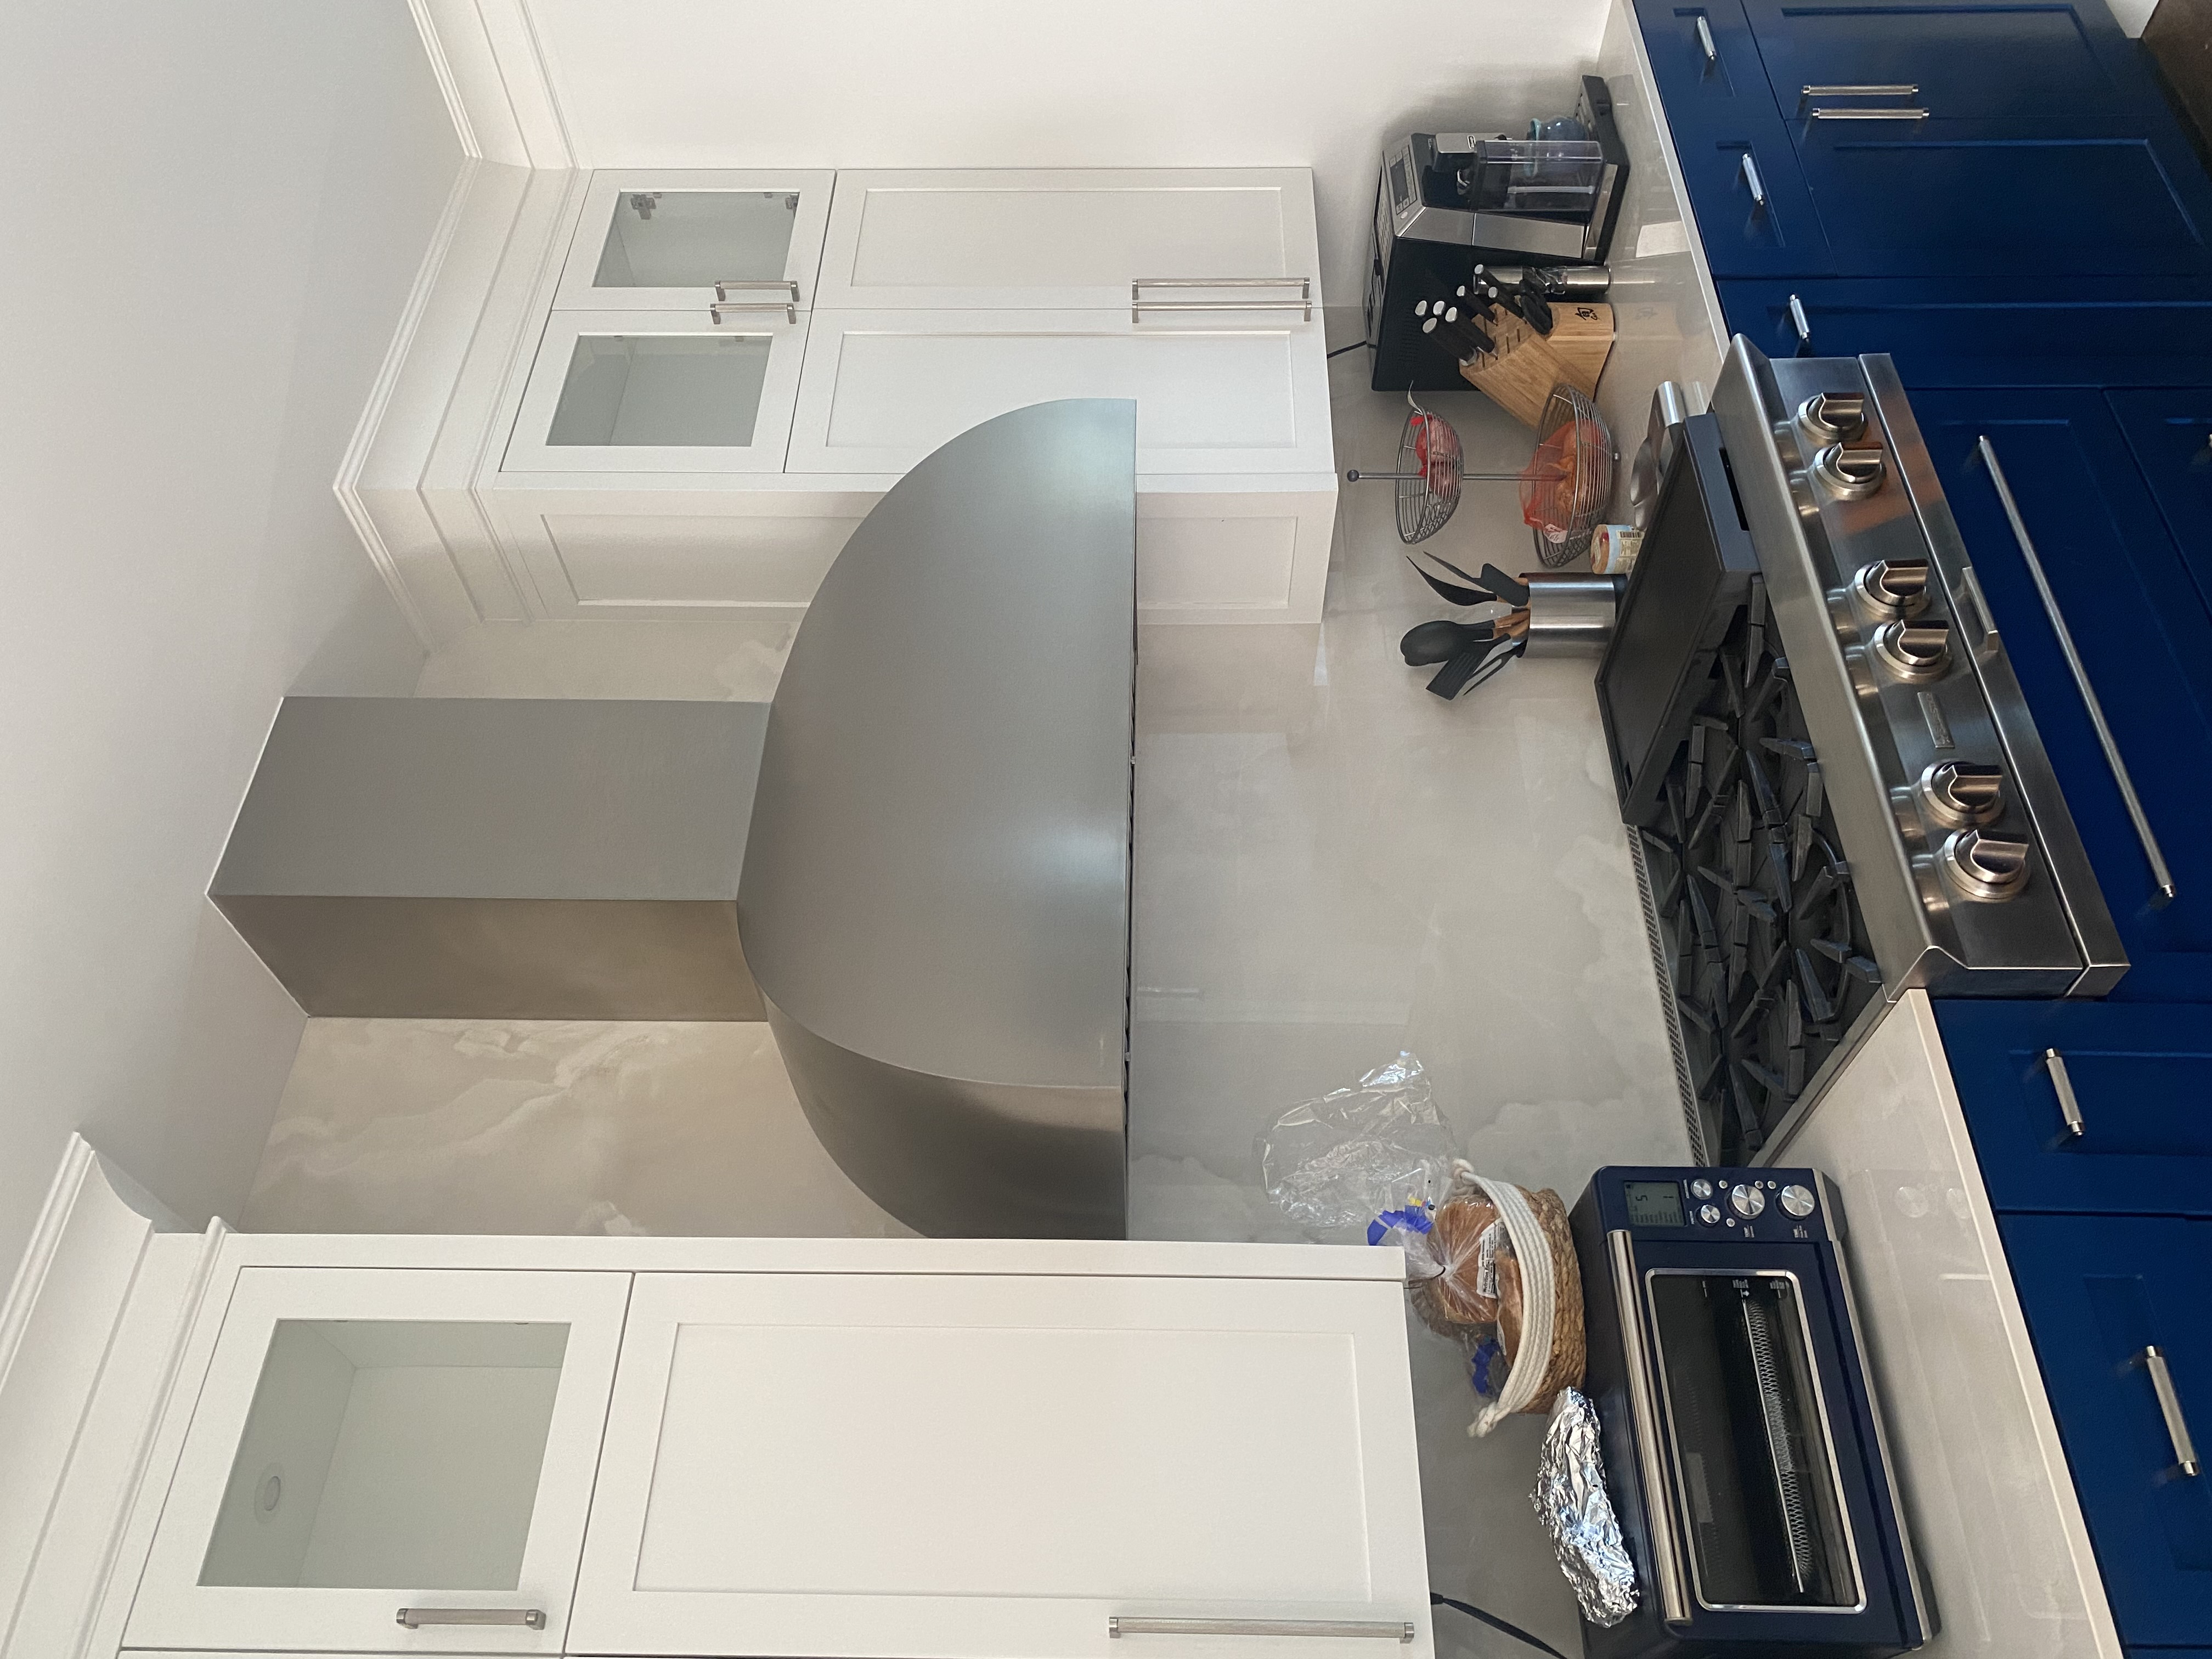 A coastal kitchen project featuring blue kitchen cabinets, marble kitchen countertops, marble backsplash with a sleek range hood design